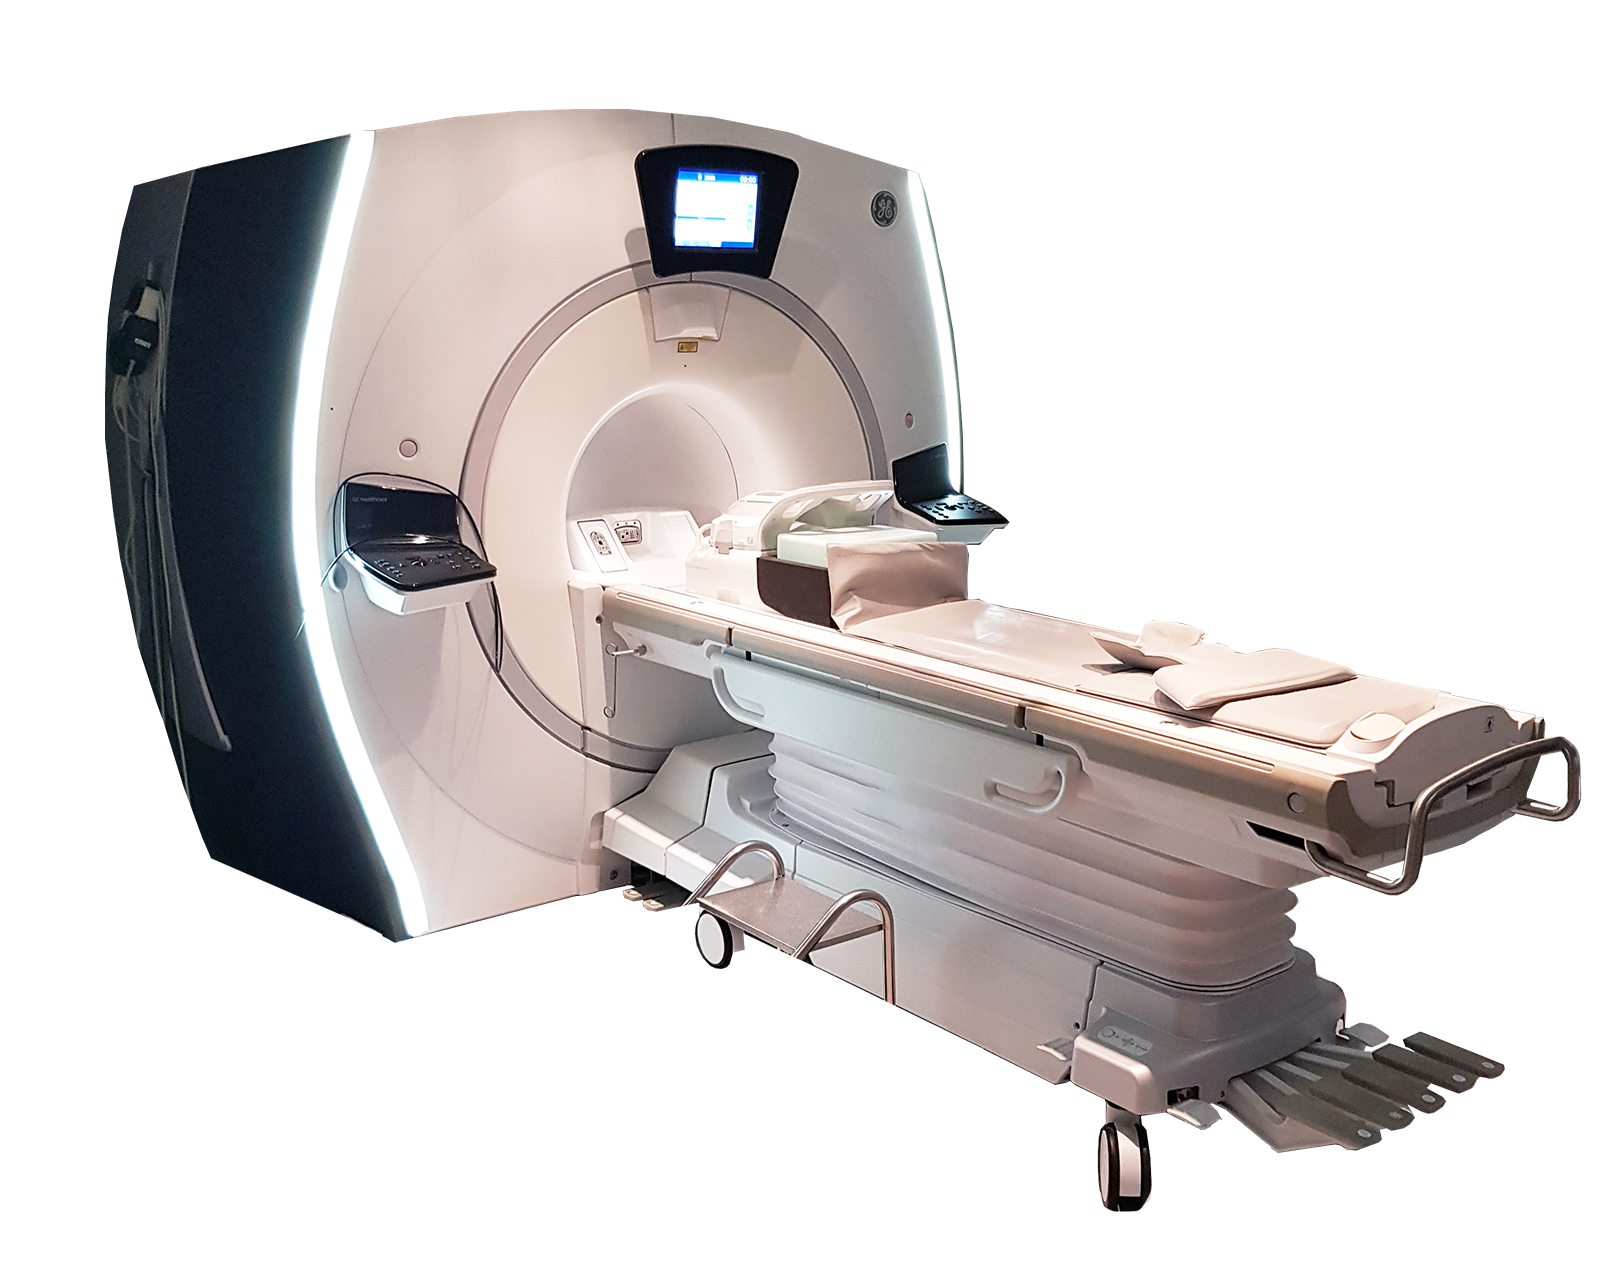 GE 1.5T 450W MRI